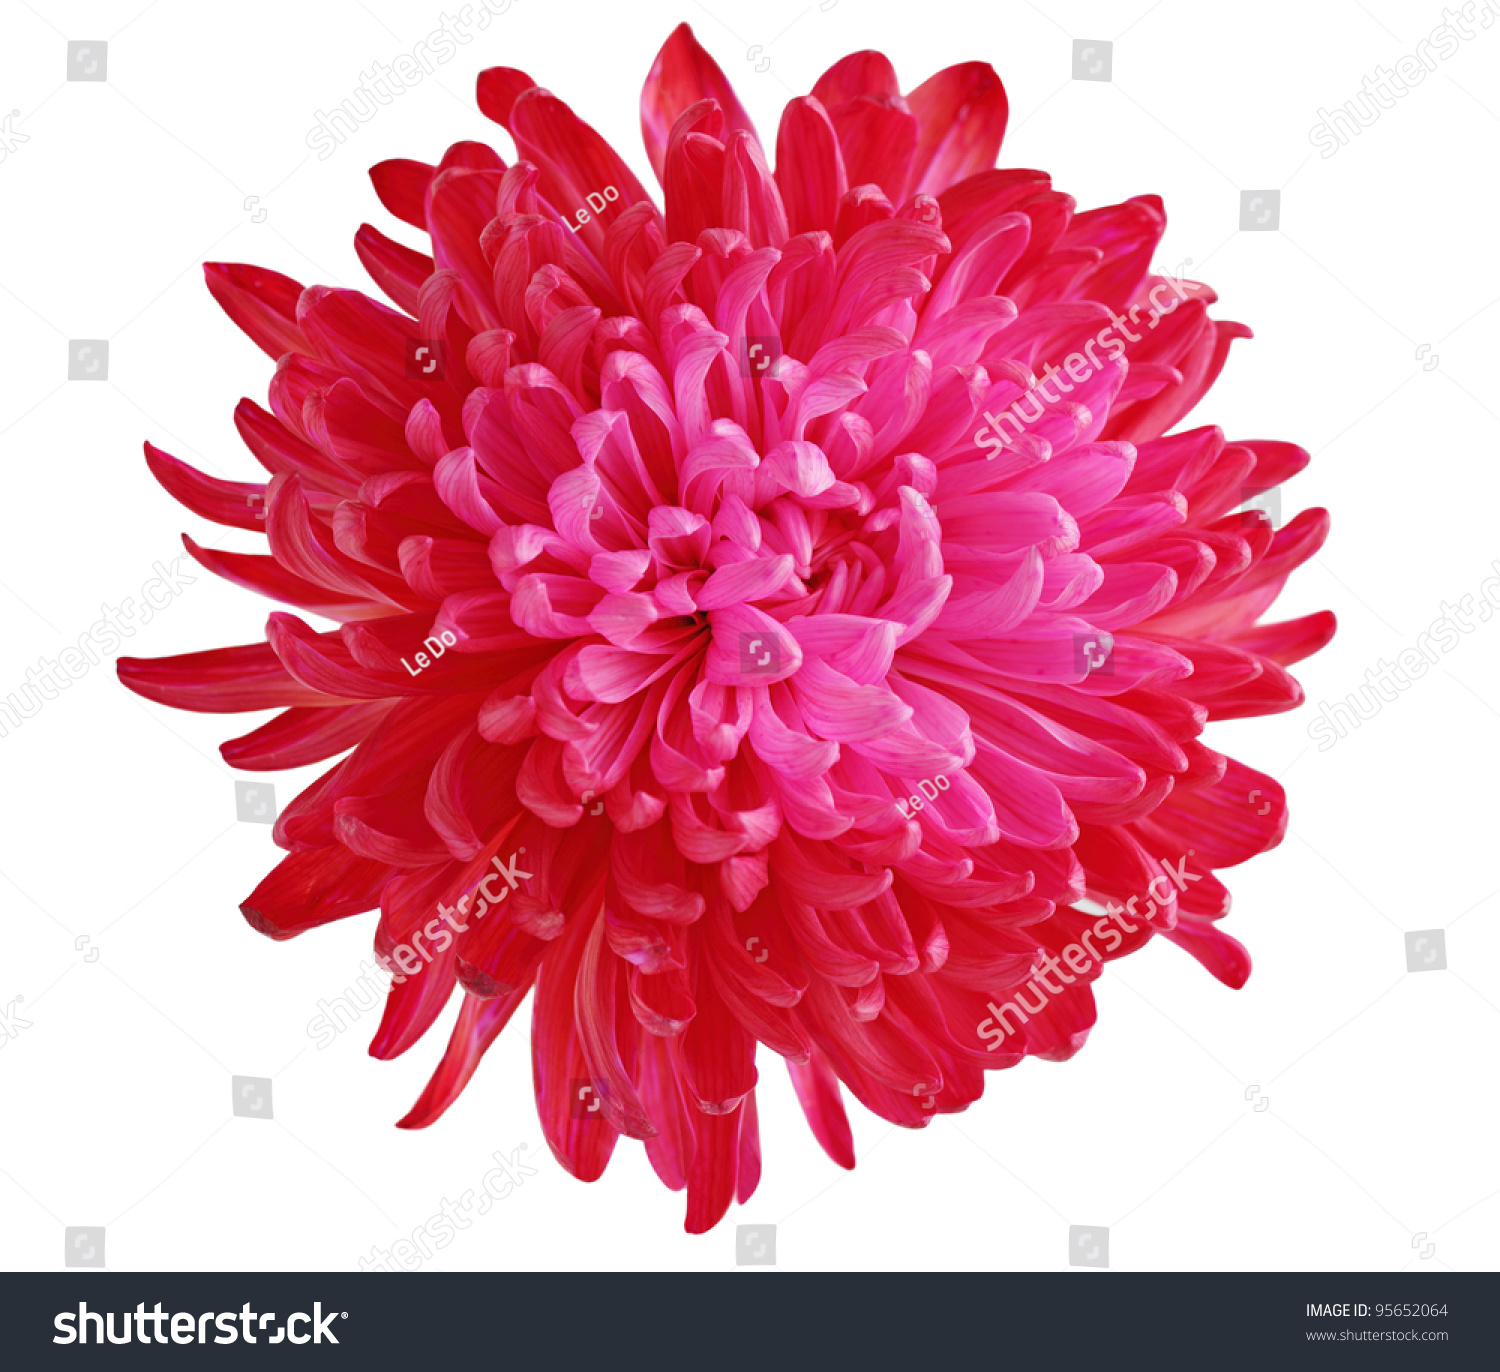 Single Fresh Red Pink Chrysanthemum Flower Stock Photo 95652064 ...